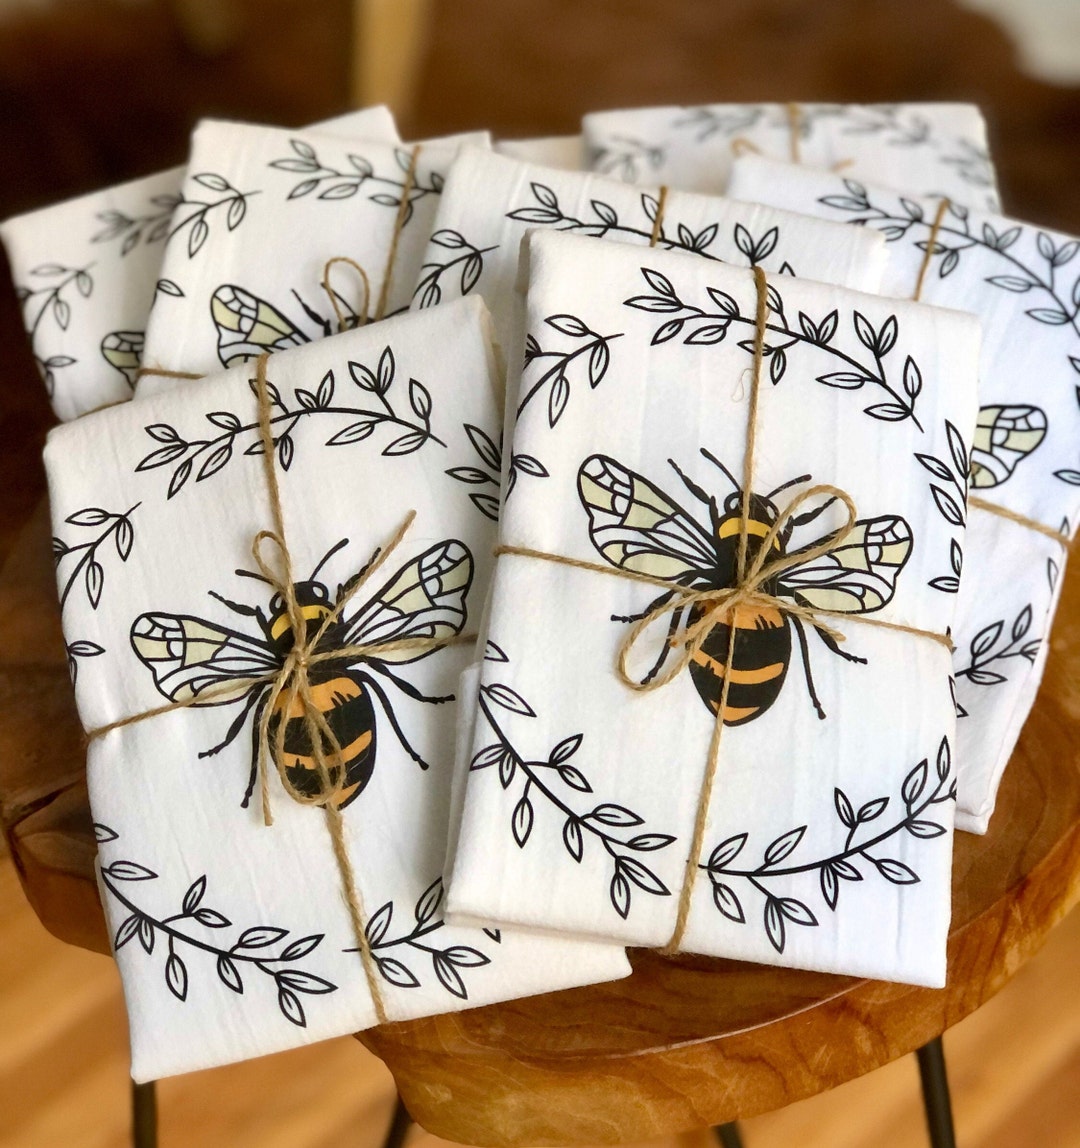 Honey Bee Dish Towels – The Elegant Farmer